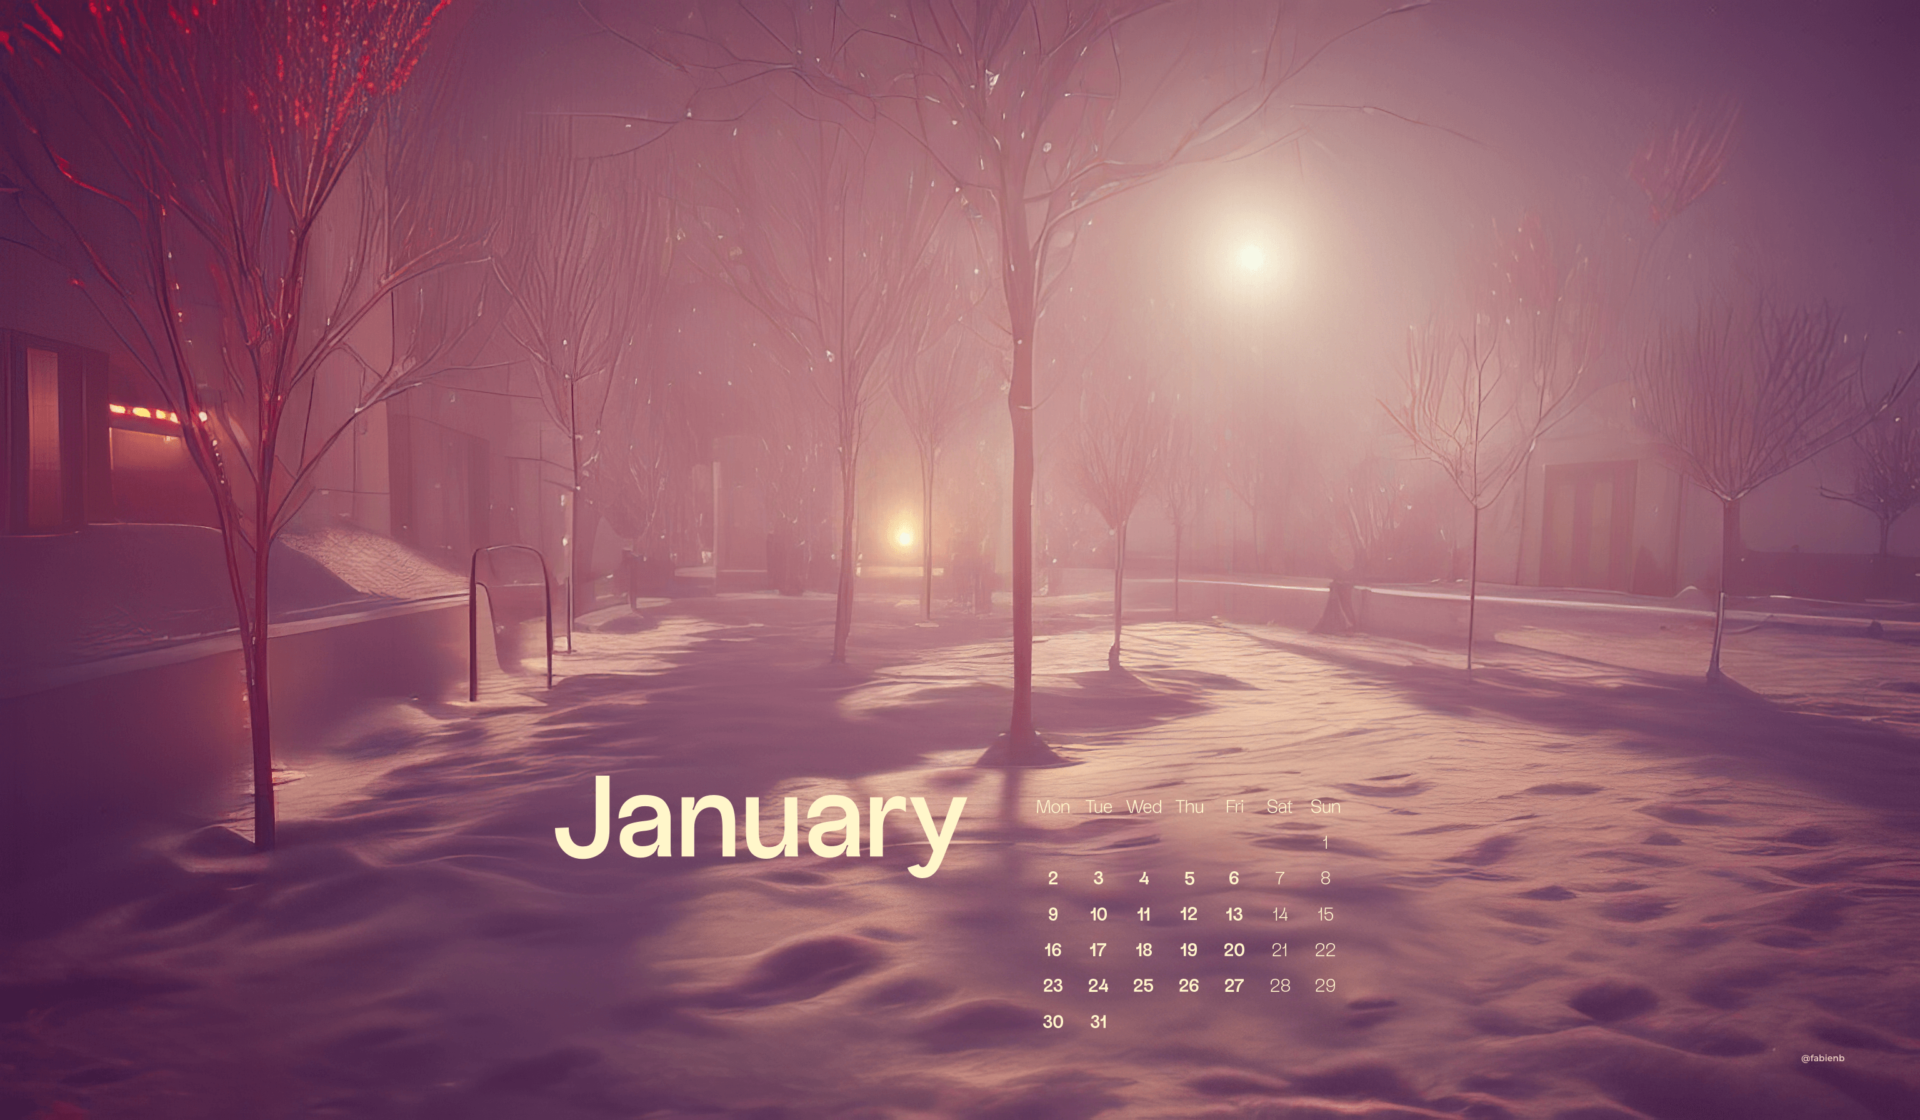 AI Desktop Calendar wallpapers January 2023 Stable Diffusion Midjourney fabienb